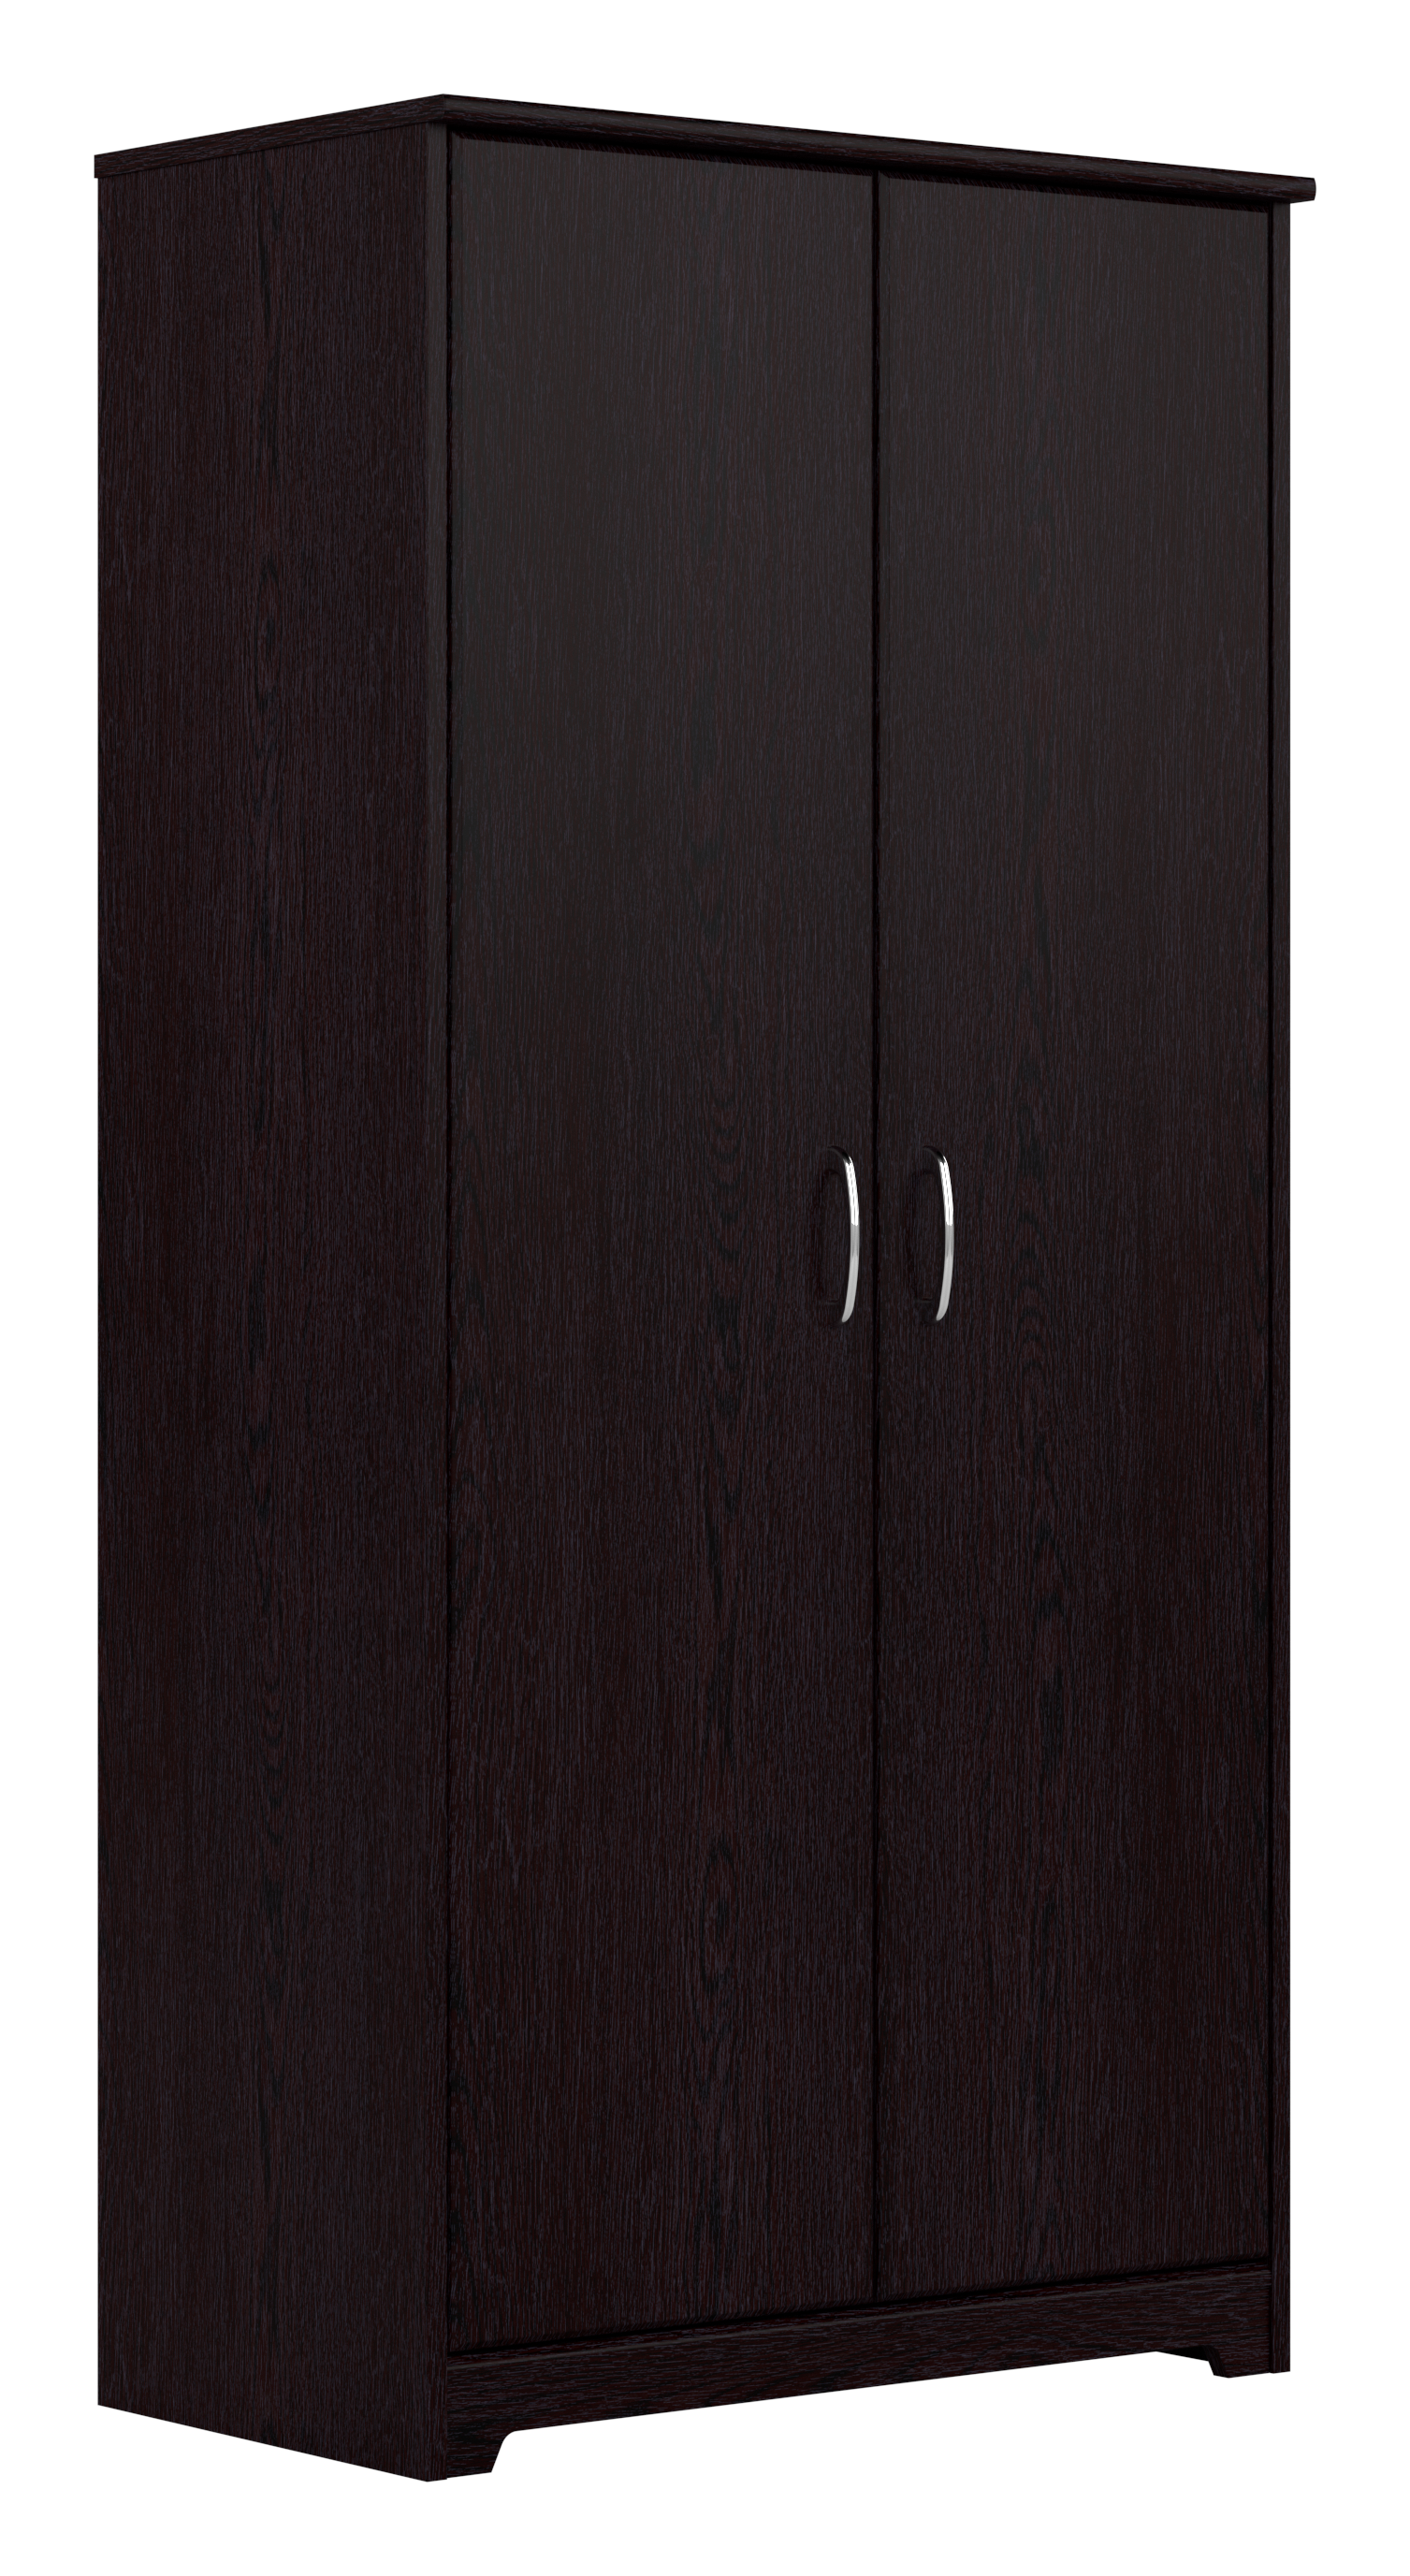 Shop Bush Furniture Cabot Tall Storage Cabinet with Doors 02 WC31899 #color_espresso oak